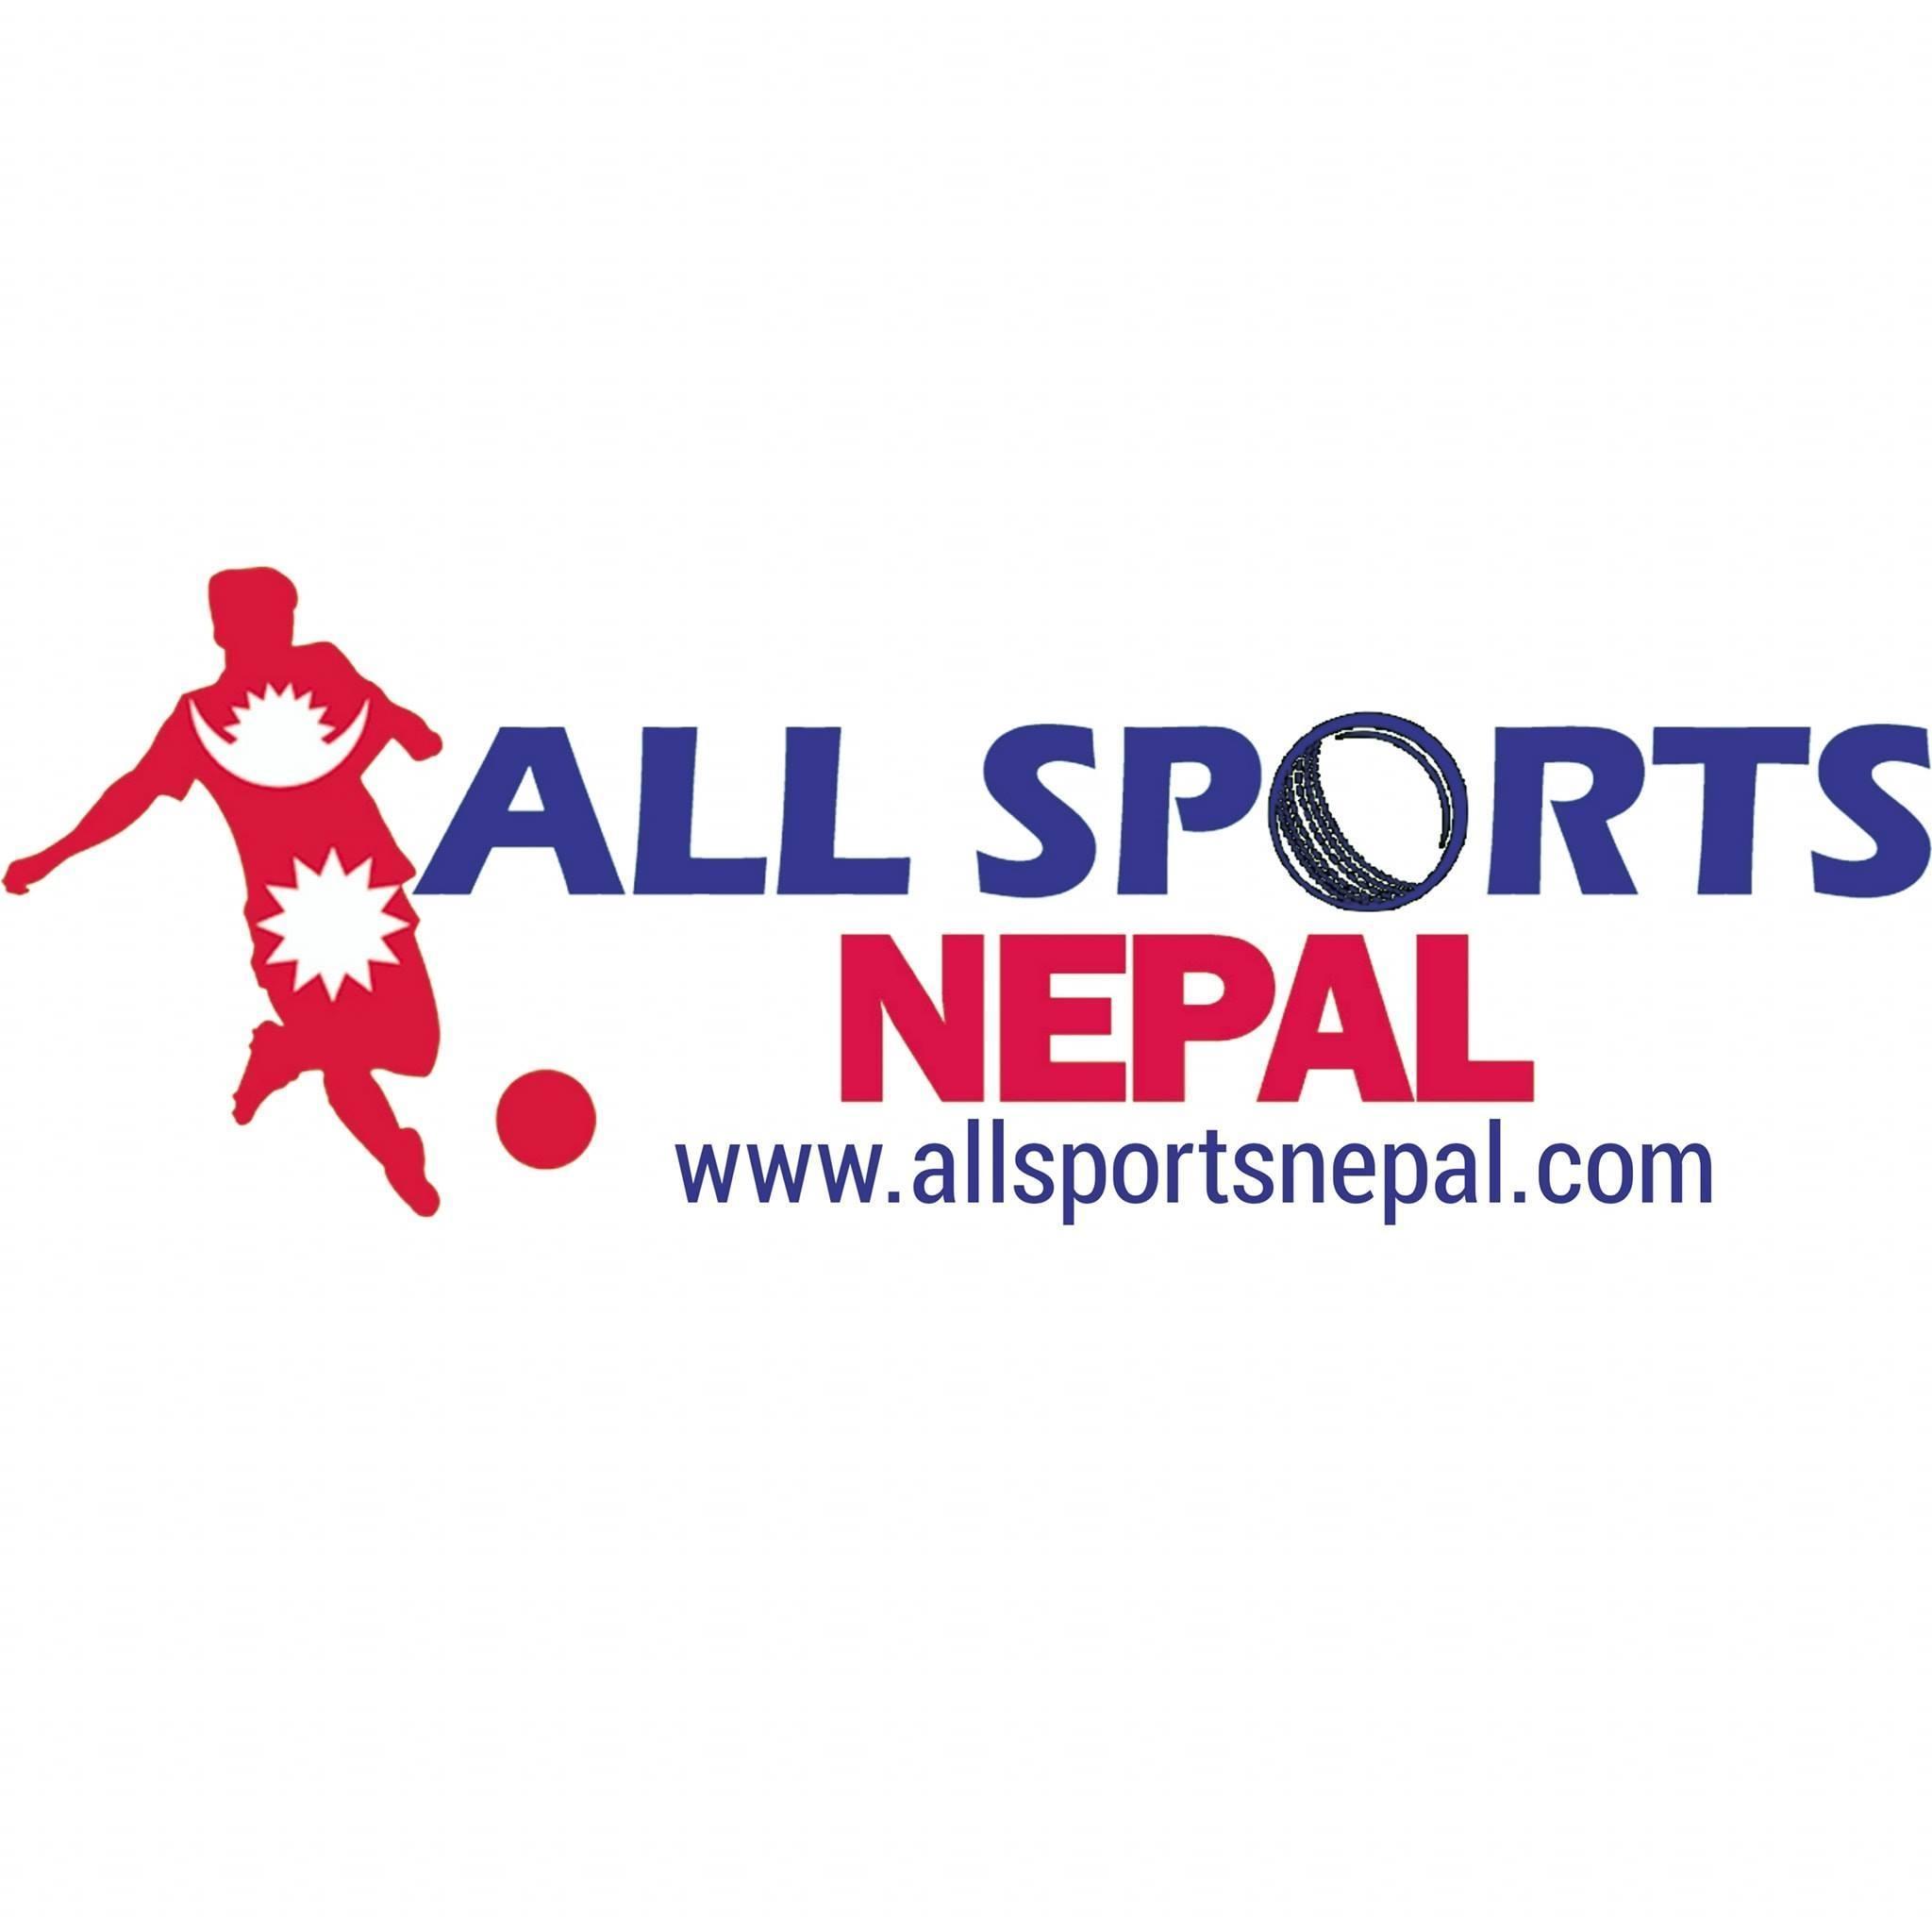 All Sports Nepal